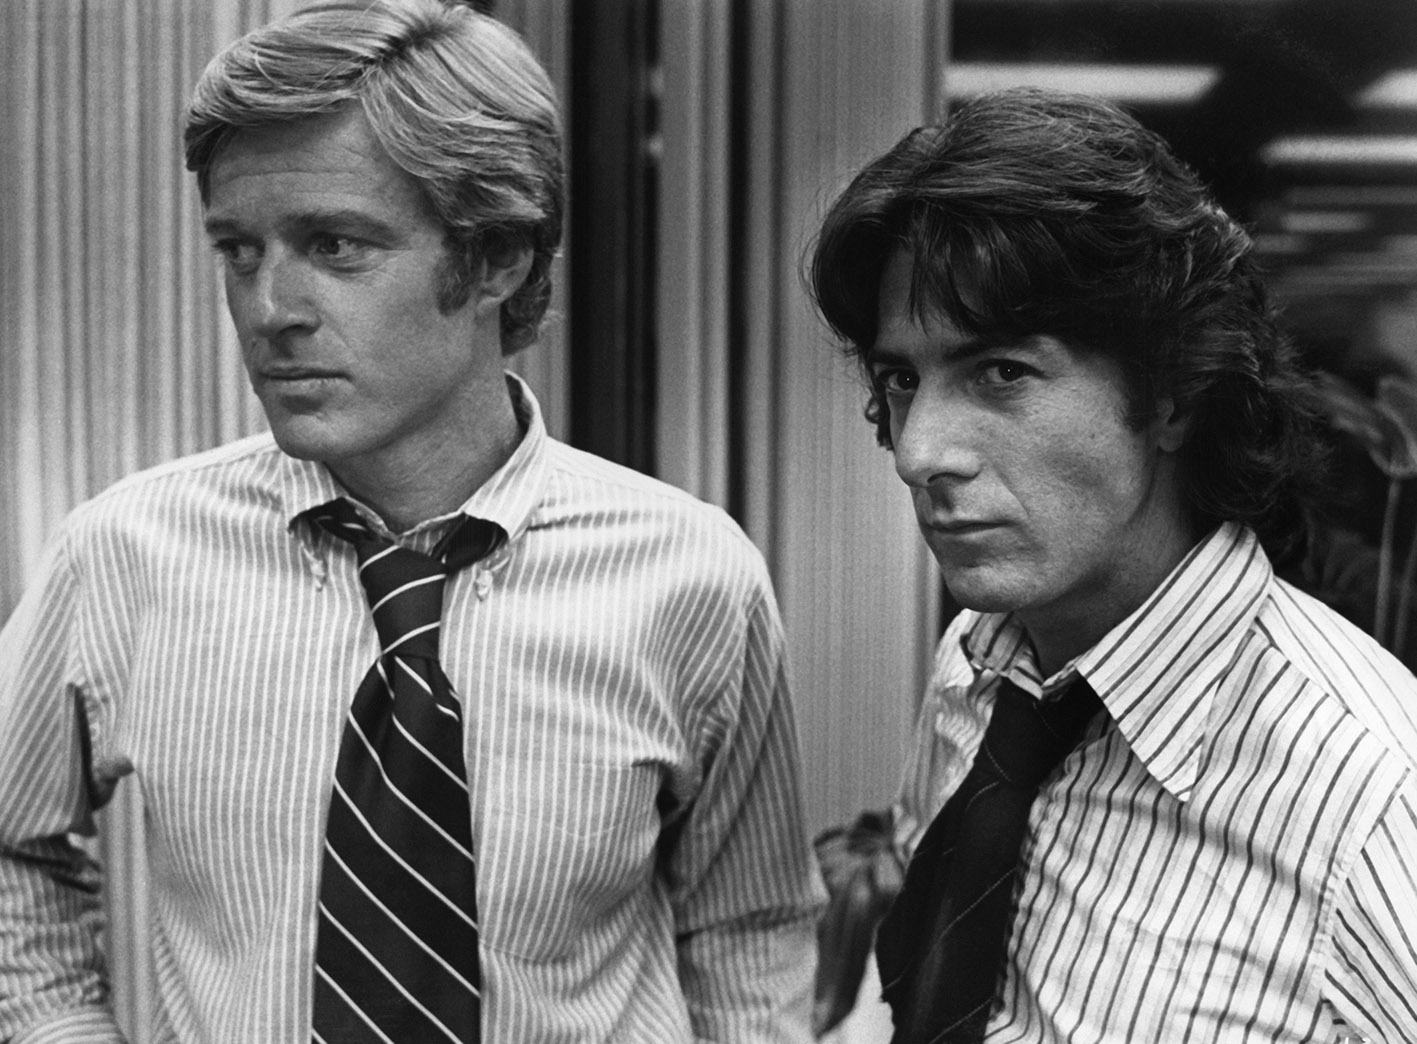 Oι ηθοποιοί Robert Redford και Dustin Hoffman υποδύονται τους δύο δημοσιογράφους της εφημερίδας Washington Post, Bob Woodward και Carl Bernstein στην ταινία του 1976 "Όλοι οι άνθρωποι του προέδρου" 'All the President's Men', αναφερόμενη στο Watergate.